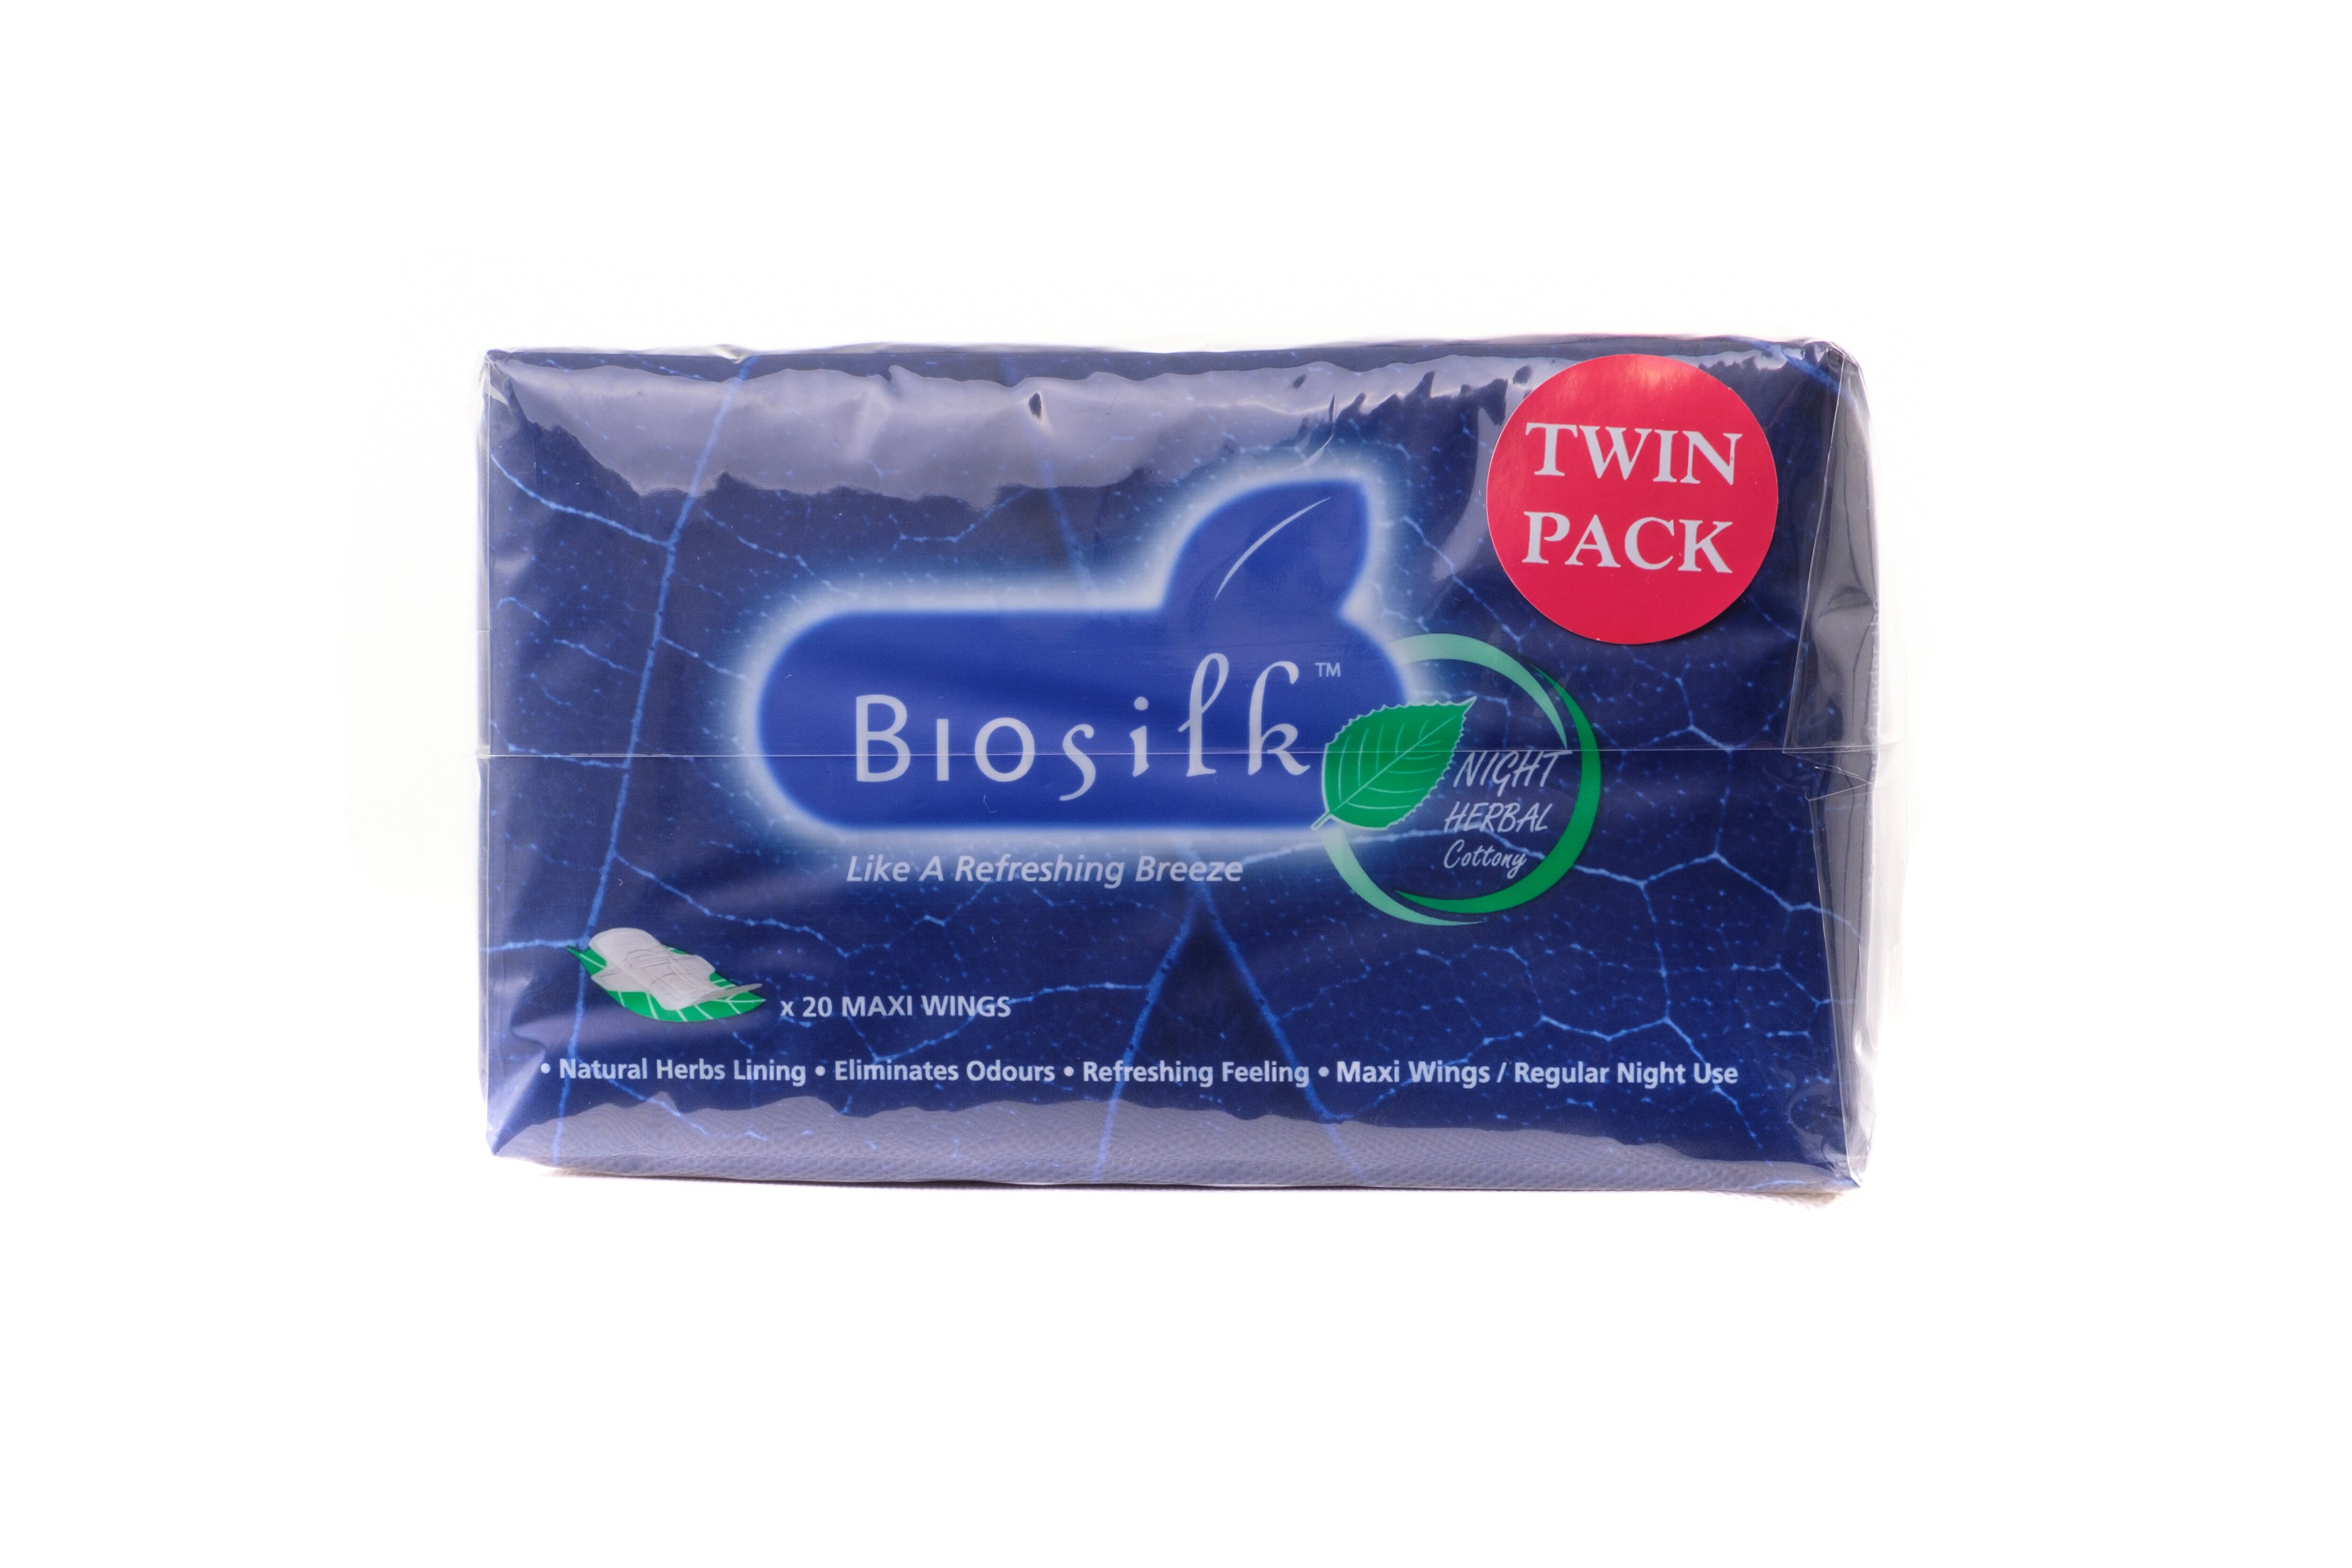 Biosilk Herbal Maxi Nightuse Twin Pack Sanitary Napkins / Pads 29cm x 20's x 2